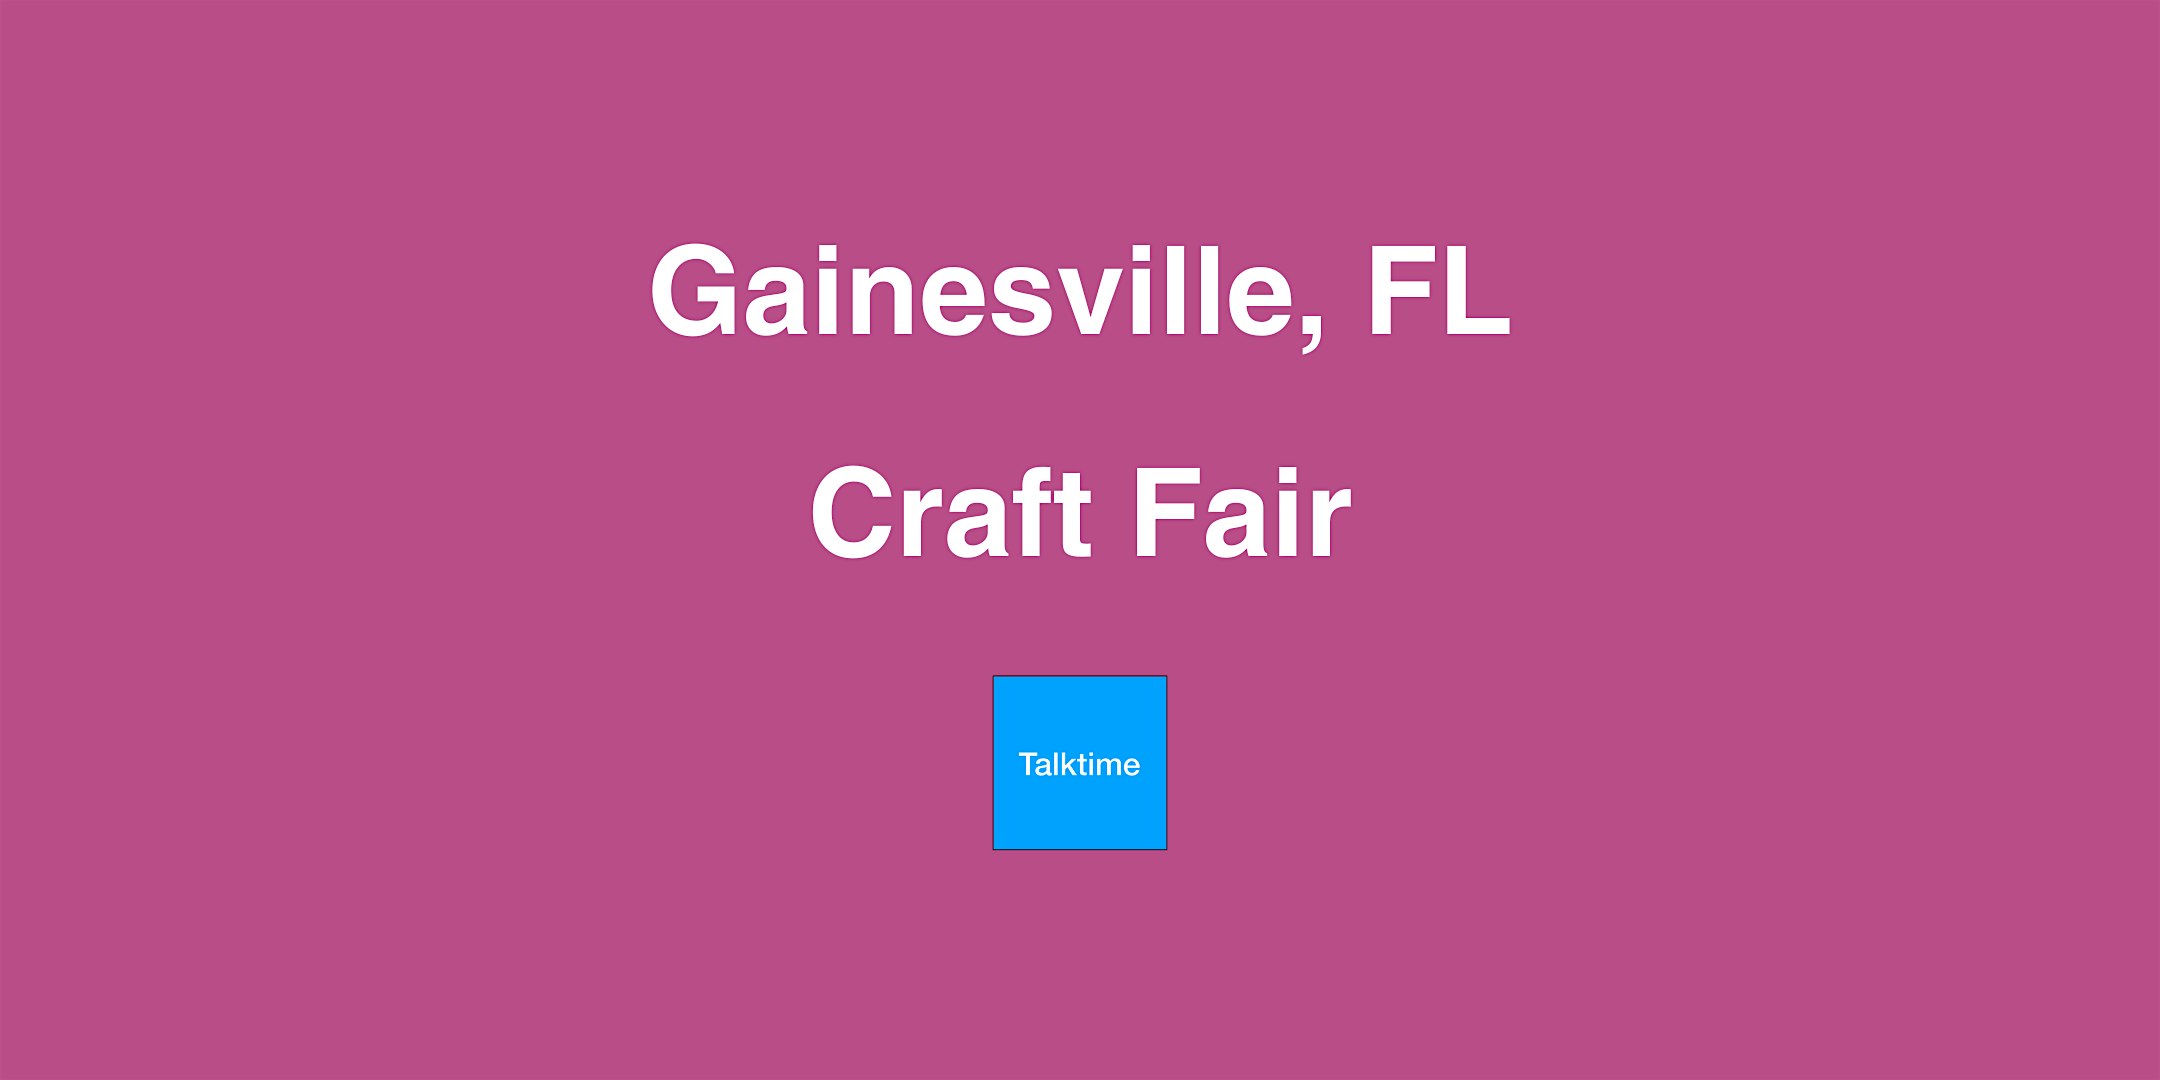 Craft Fair - Gainesville